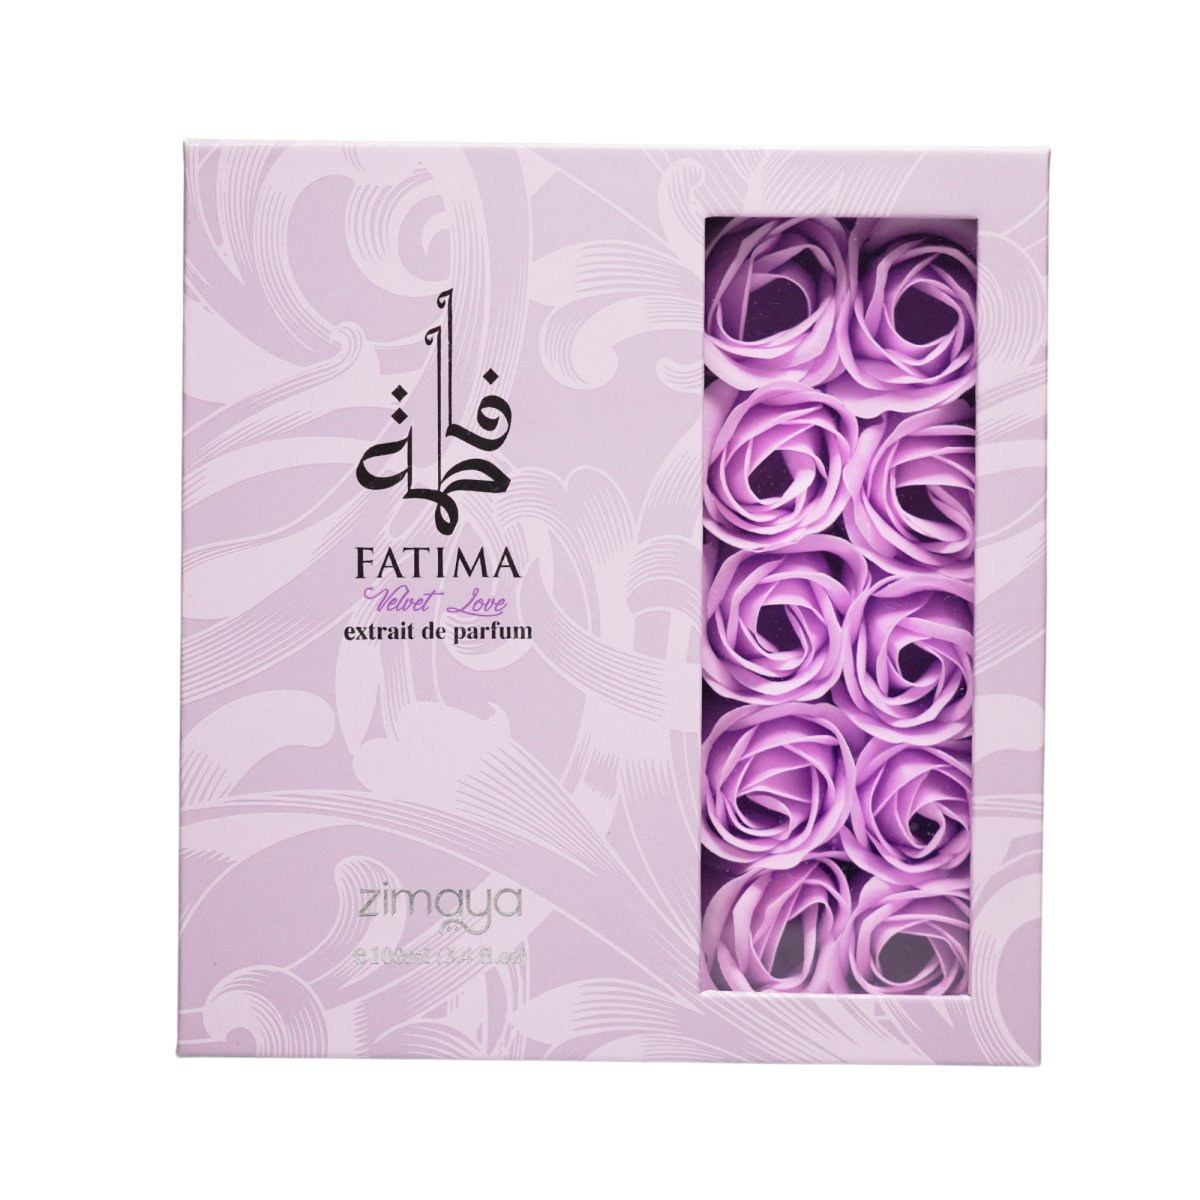 Zimaya Ladies Fatima Velvet Love Extrait de Parfum Spray - Afnan - 3.4 oz - Eau de Parfum - Fragrance - 6290171071068 - 